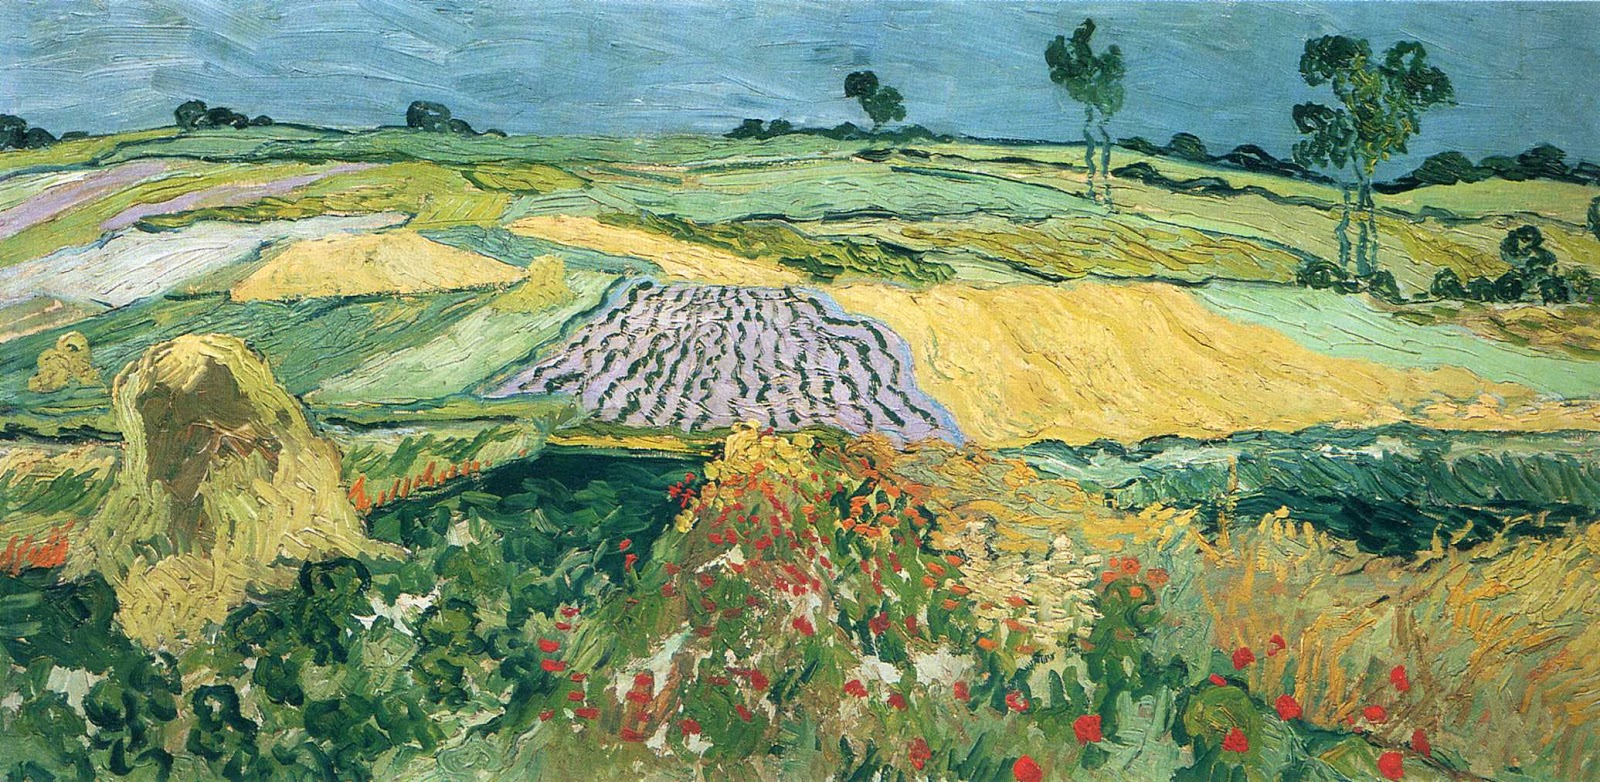 Vincent+Van+Gogh-1853-1890 (850).jpg